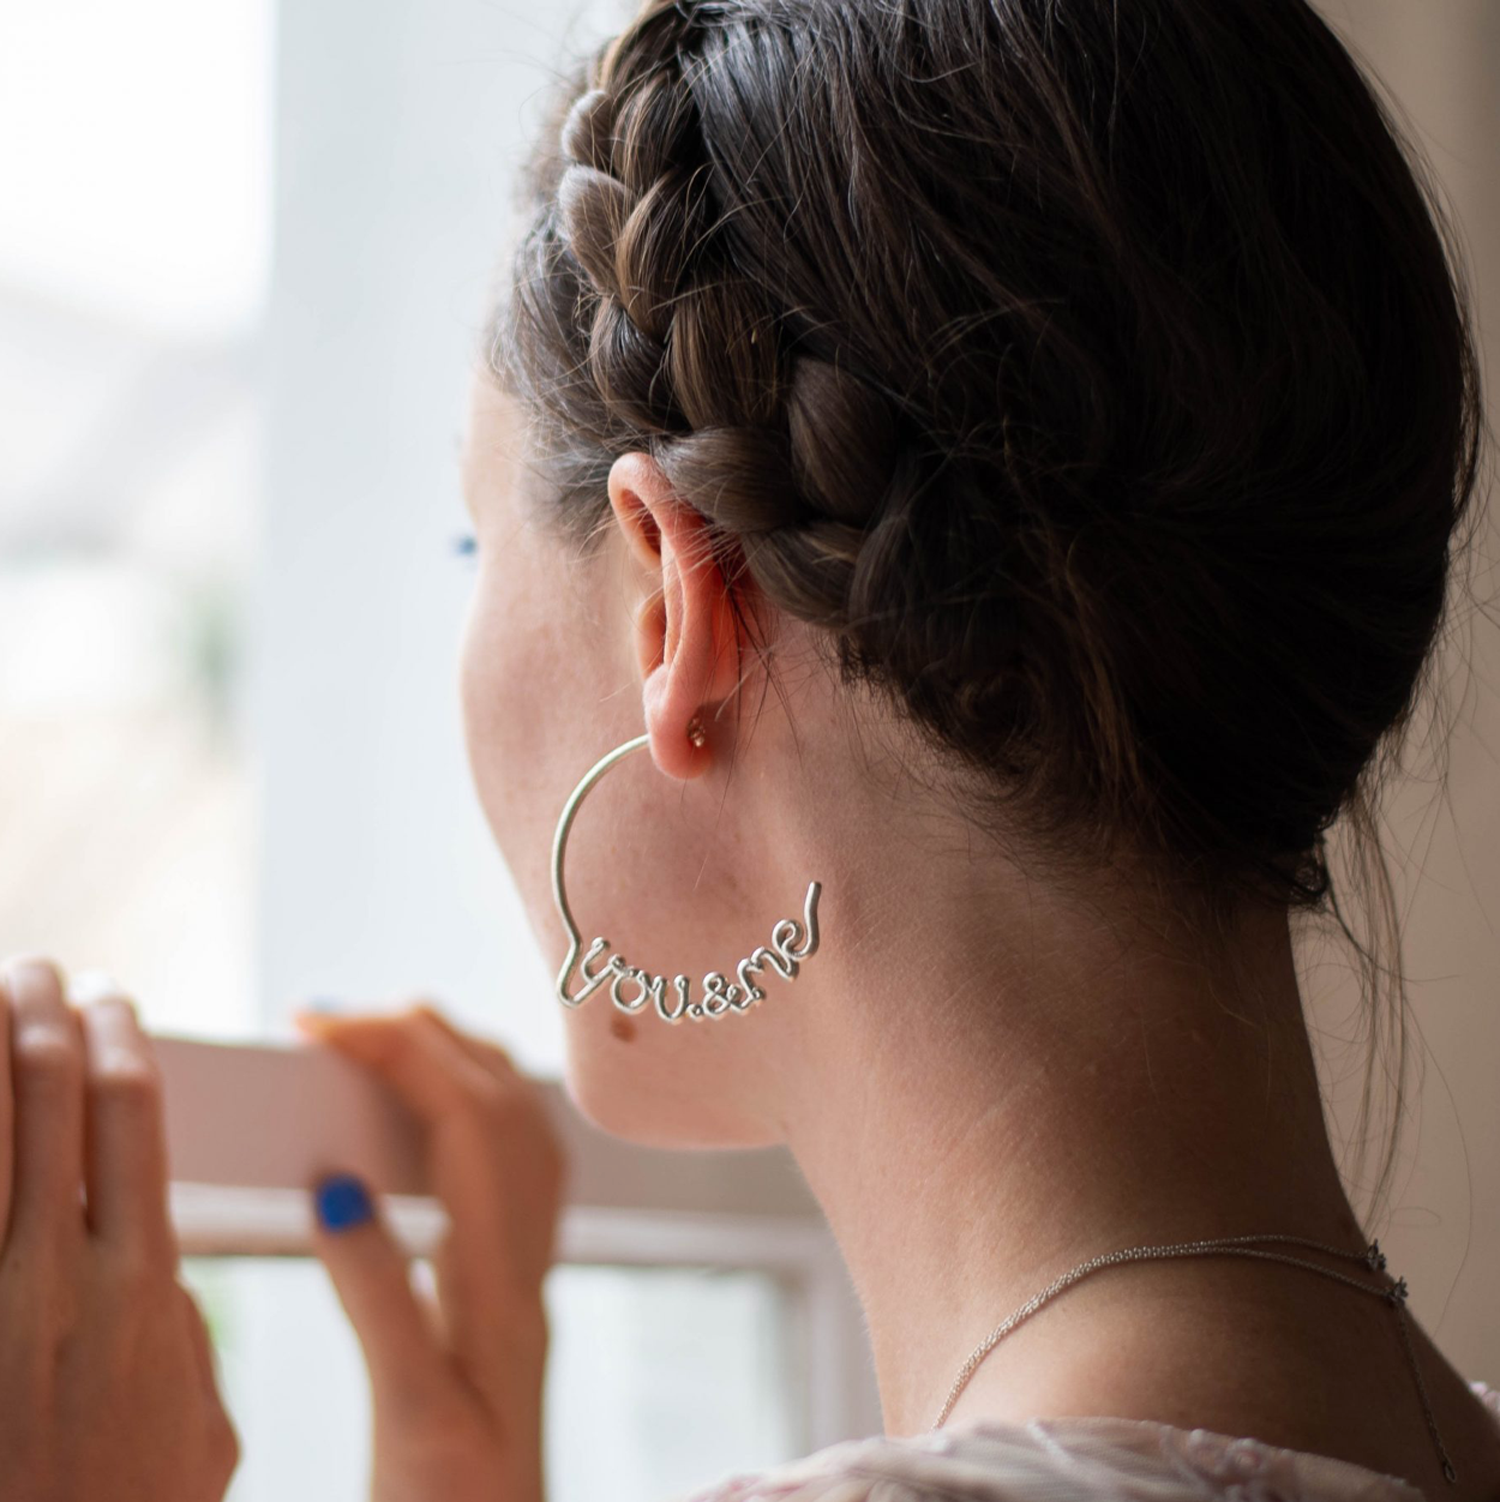 Zoe Sherwood 'You & Me' hoop earrings seen on model.